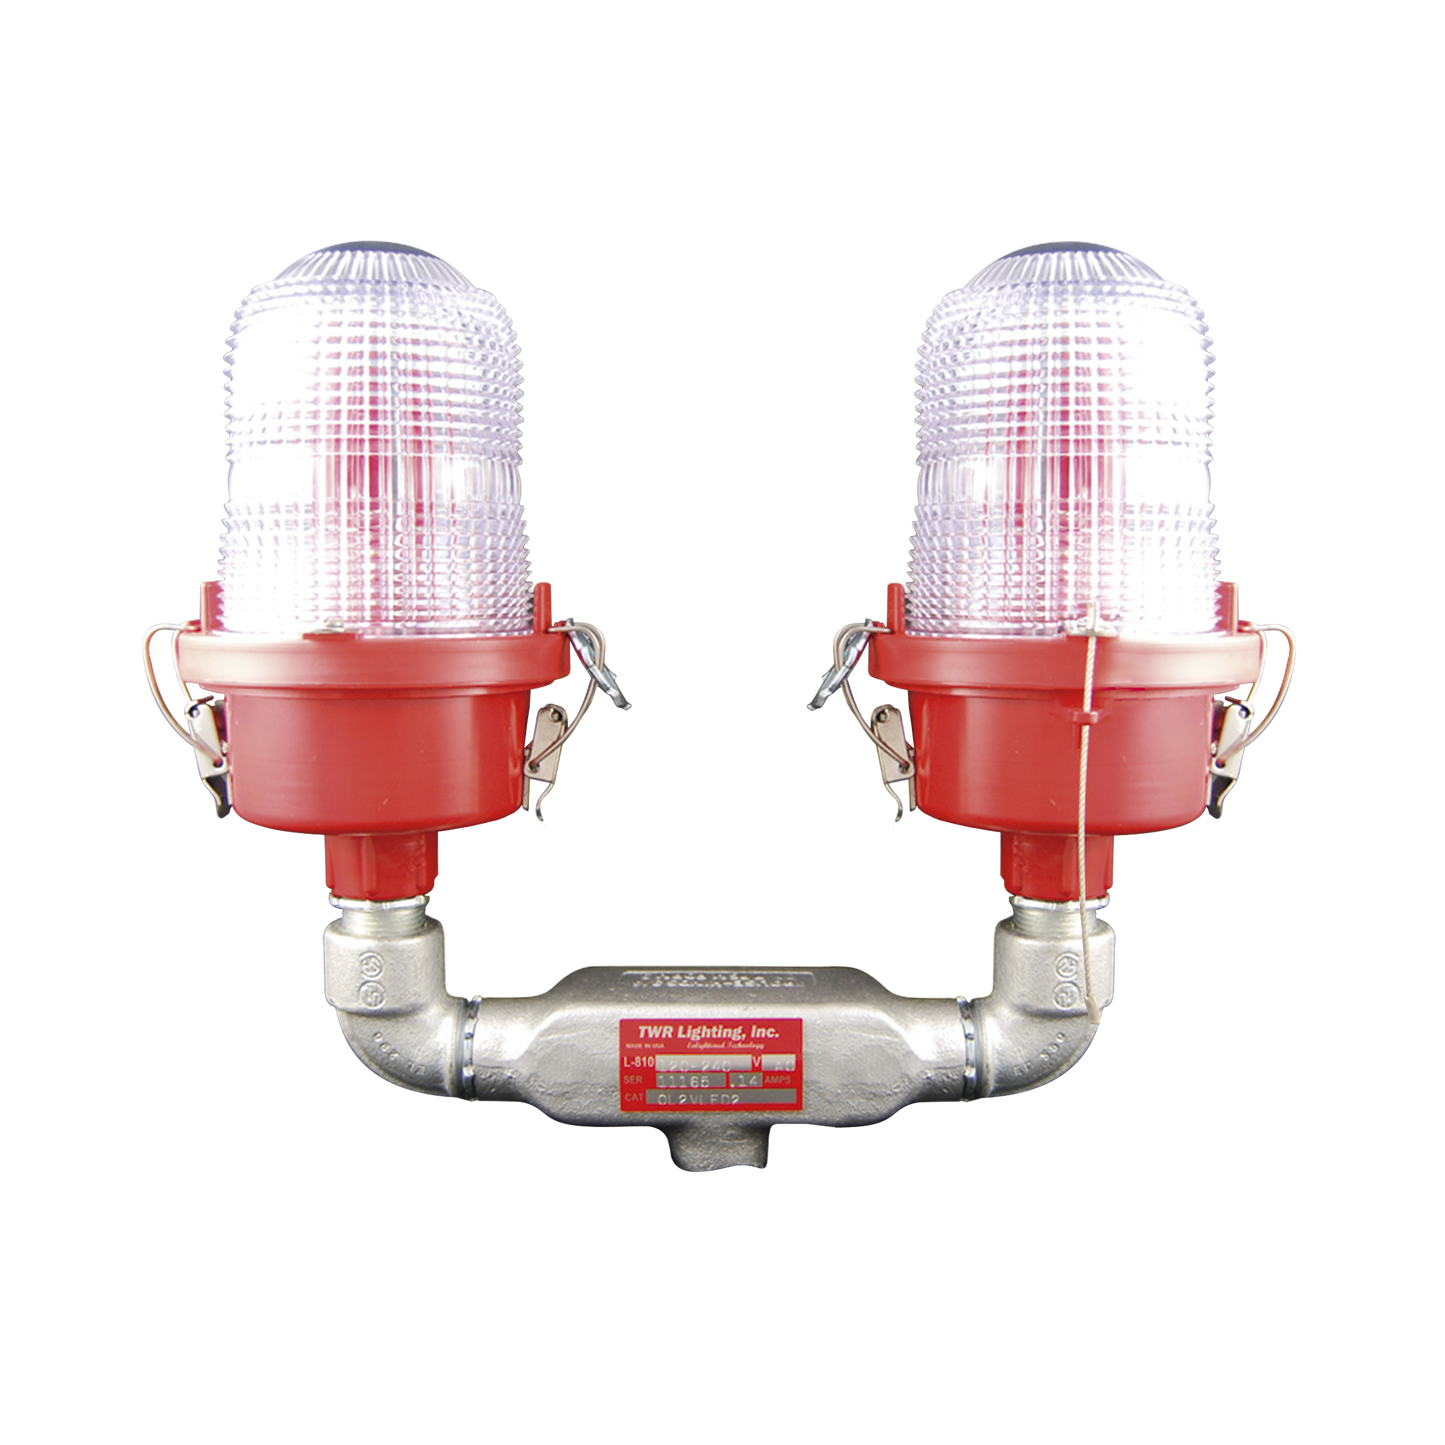 Lámpara de Obstrucción Roja Tipo L-810, Doble LED de baja intensidad, (12 - 24 Vcc).